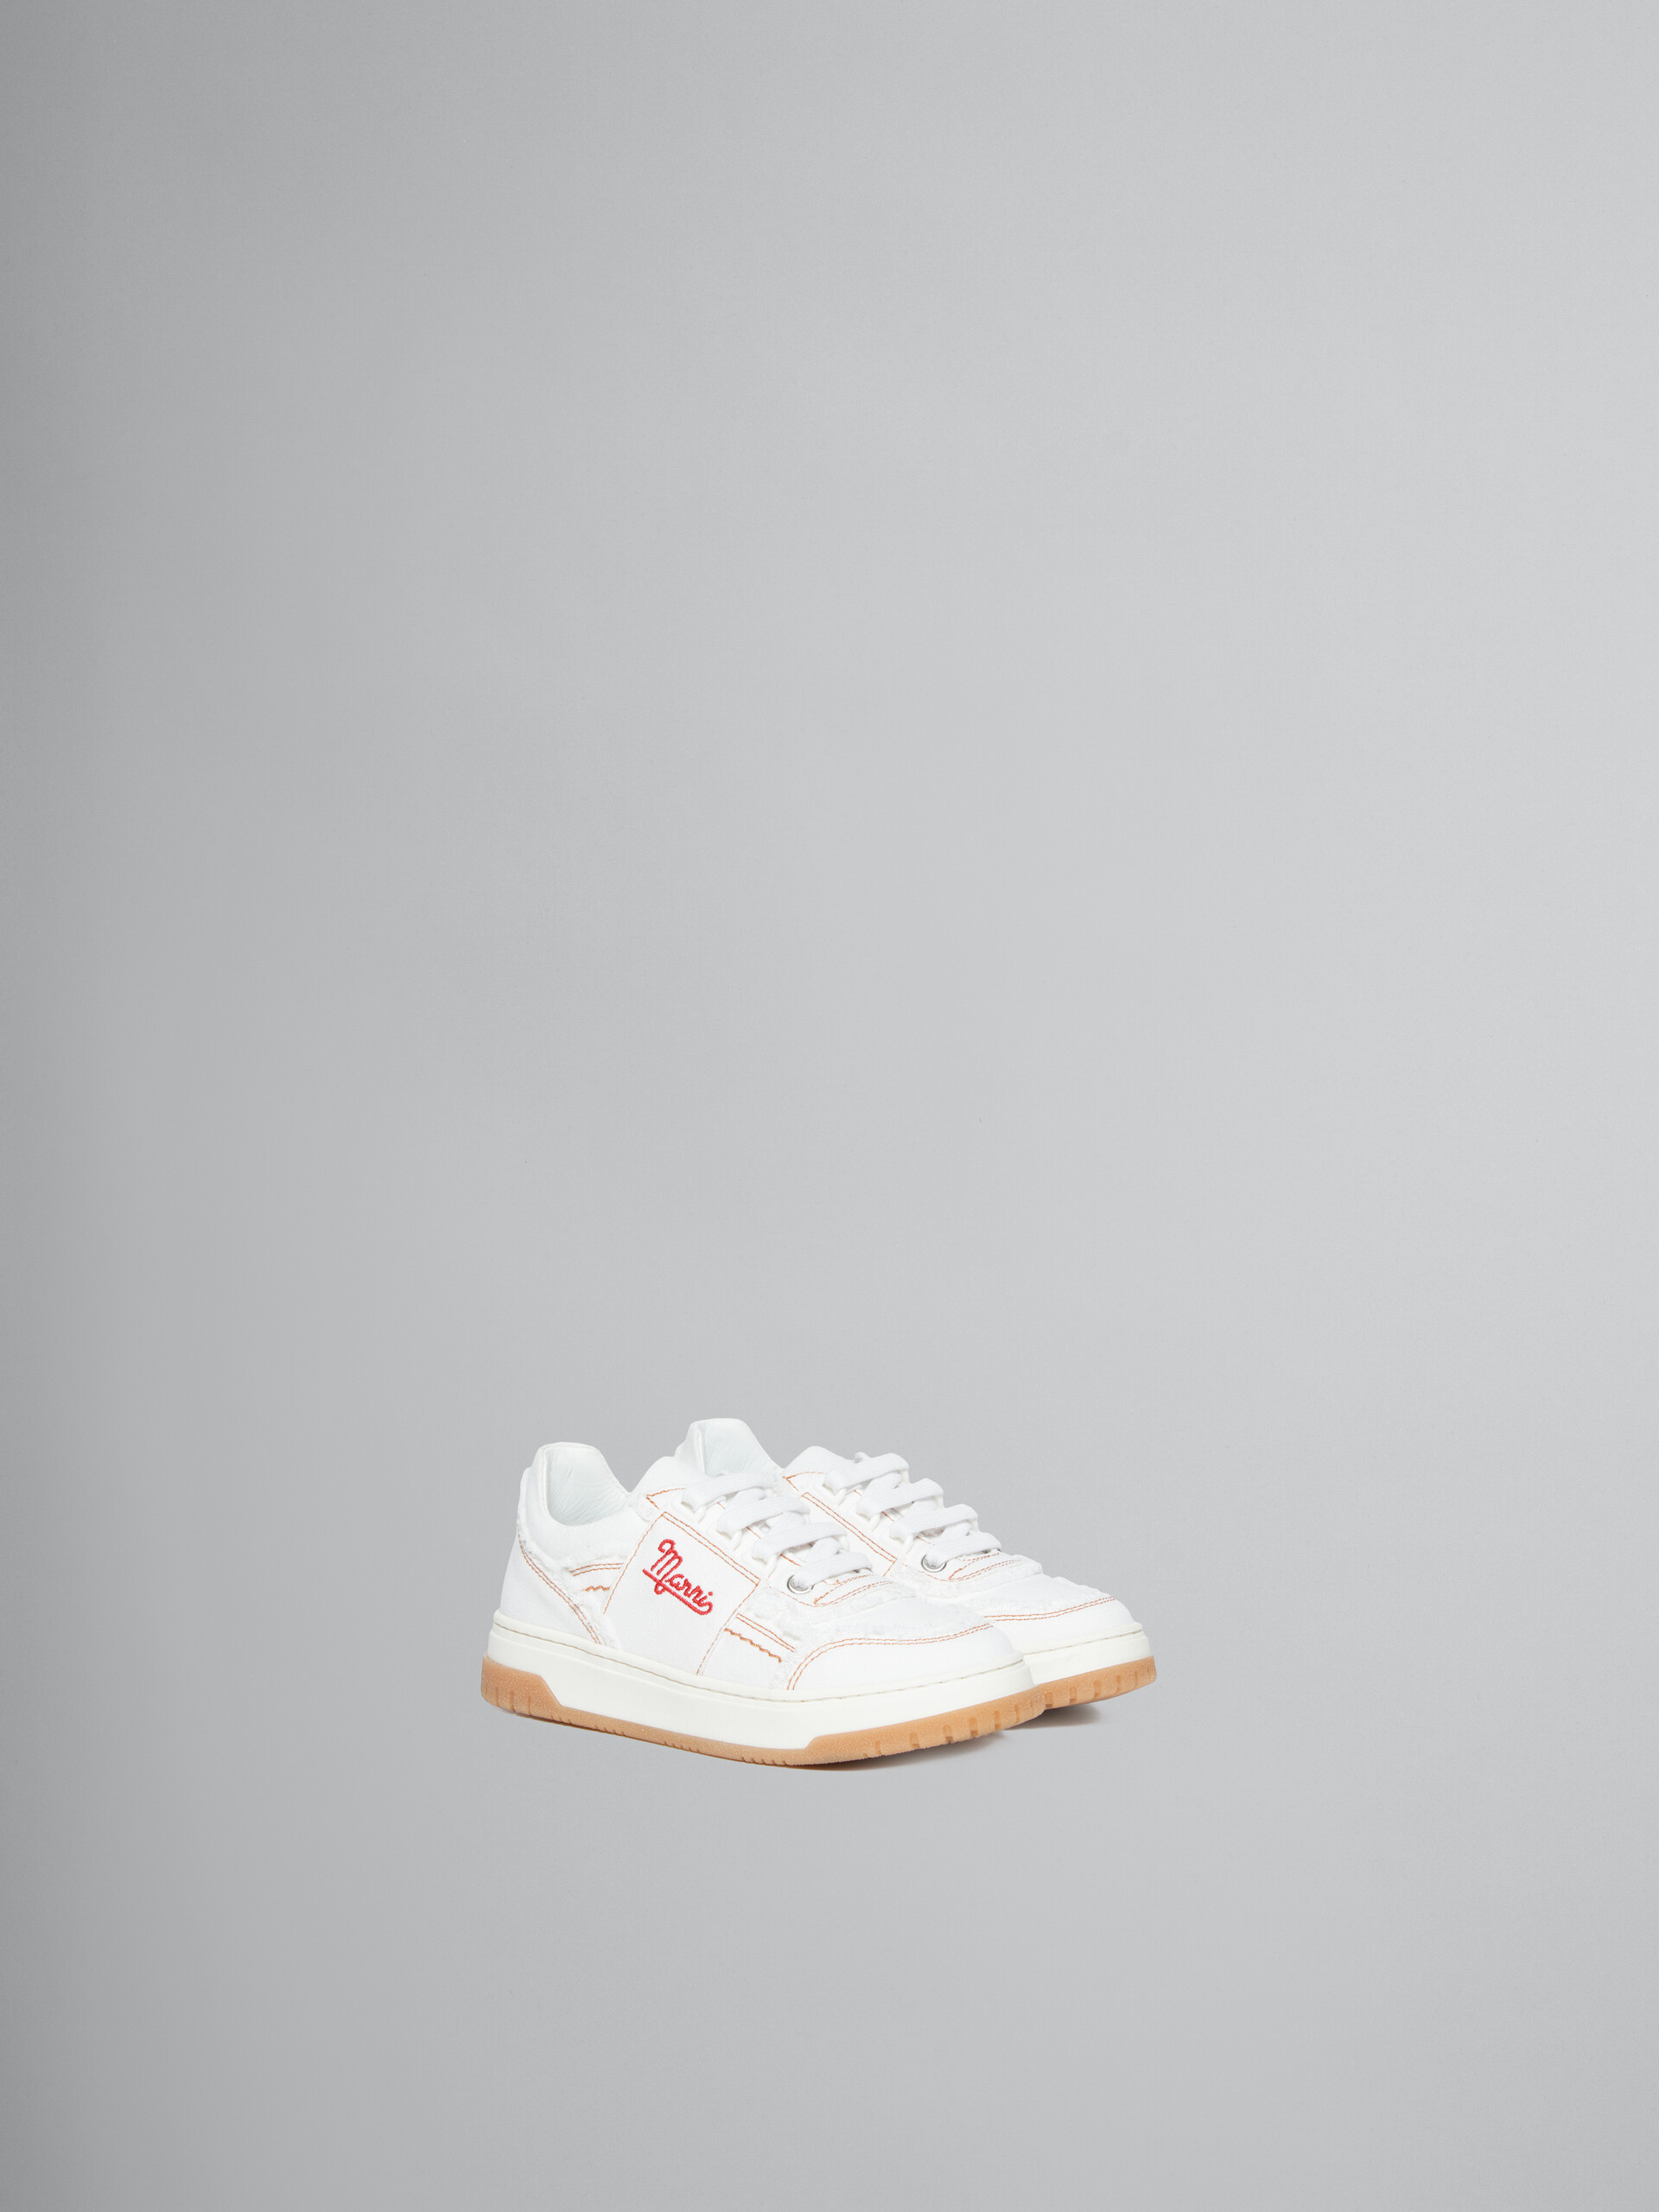 Sneakers en denim blanc avec logo - ENFANT - Image 2